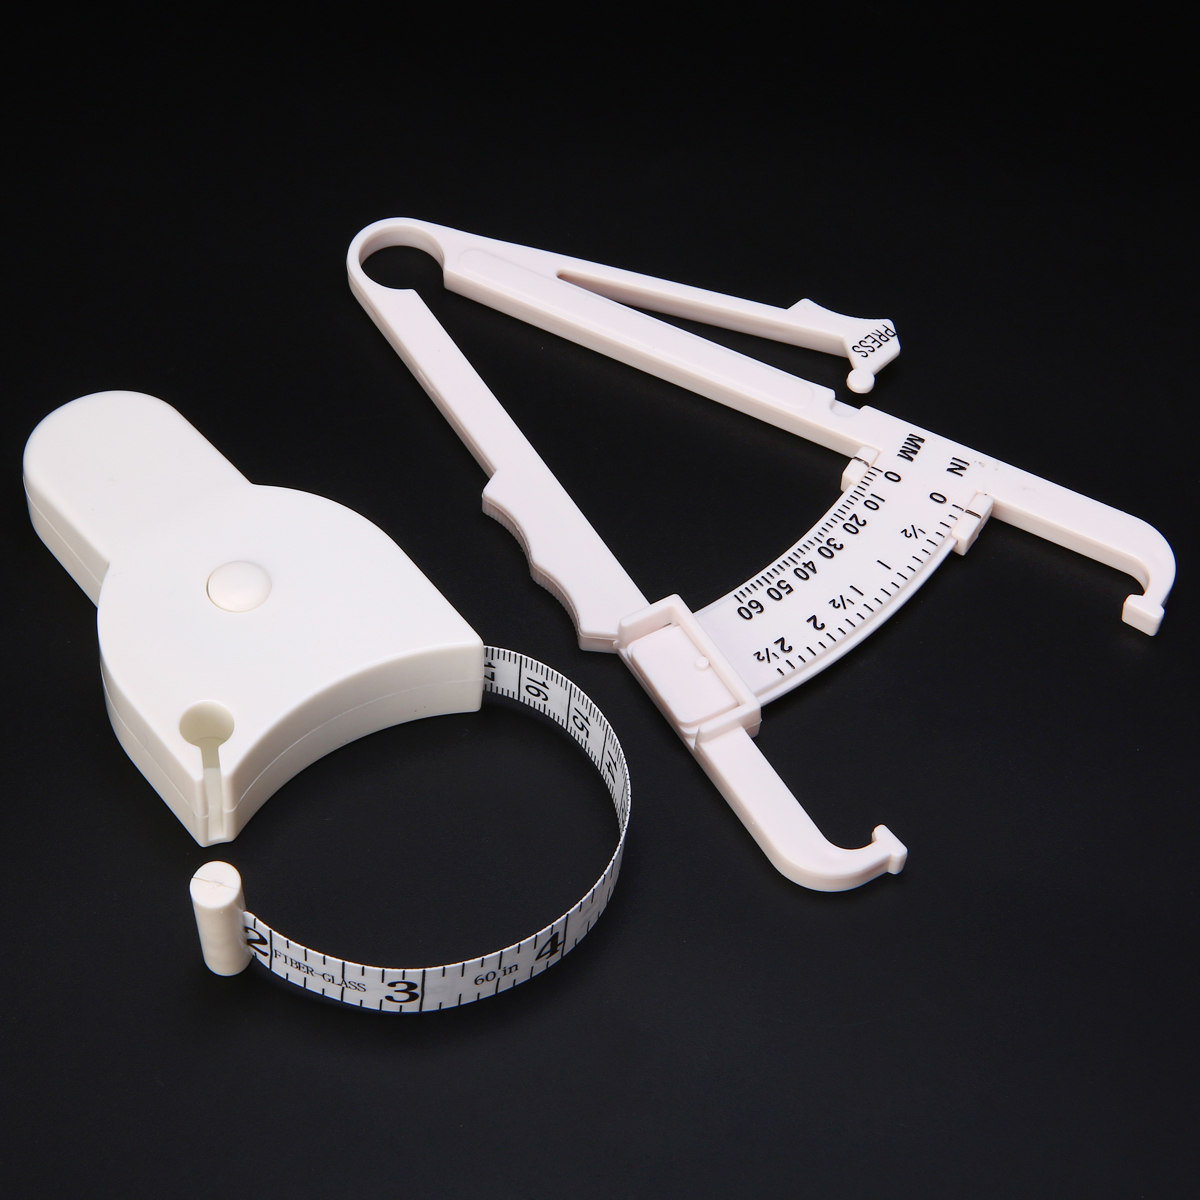 2Pcs/Set White PVC Body Fat Caliper Measure Tape Tester Fitness For Lose Weight 